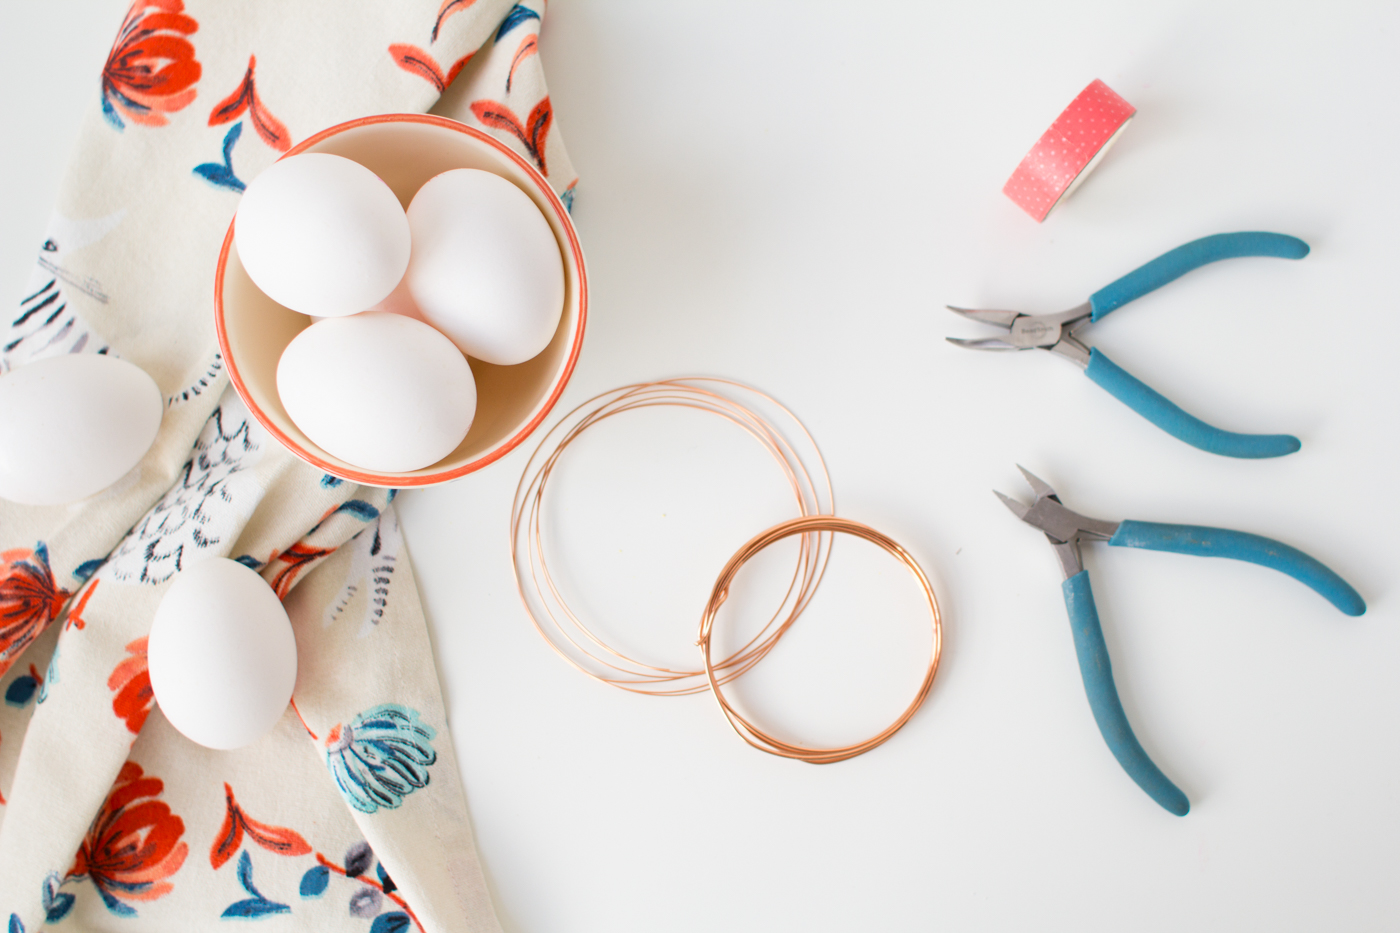 DIY Copper Wire Easter Egg Baskets | @fallfordiy Materials